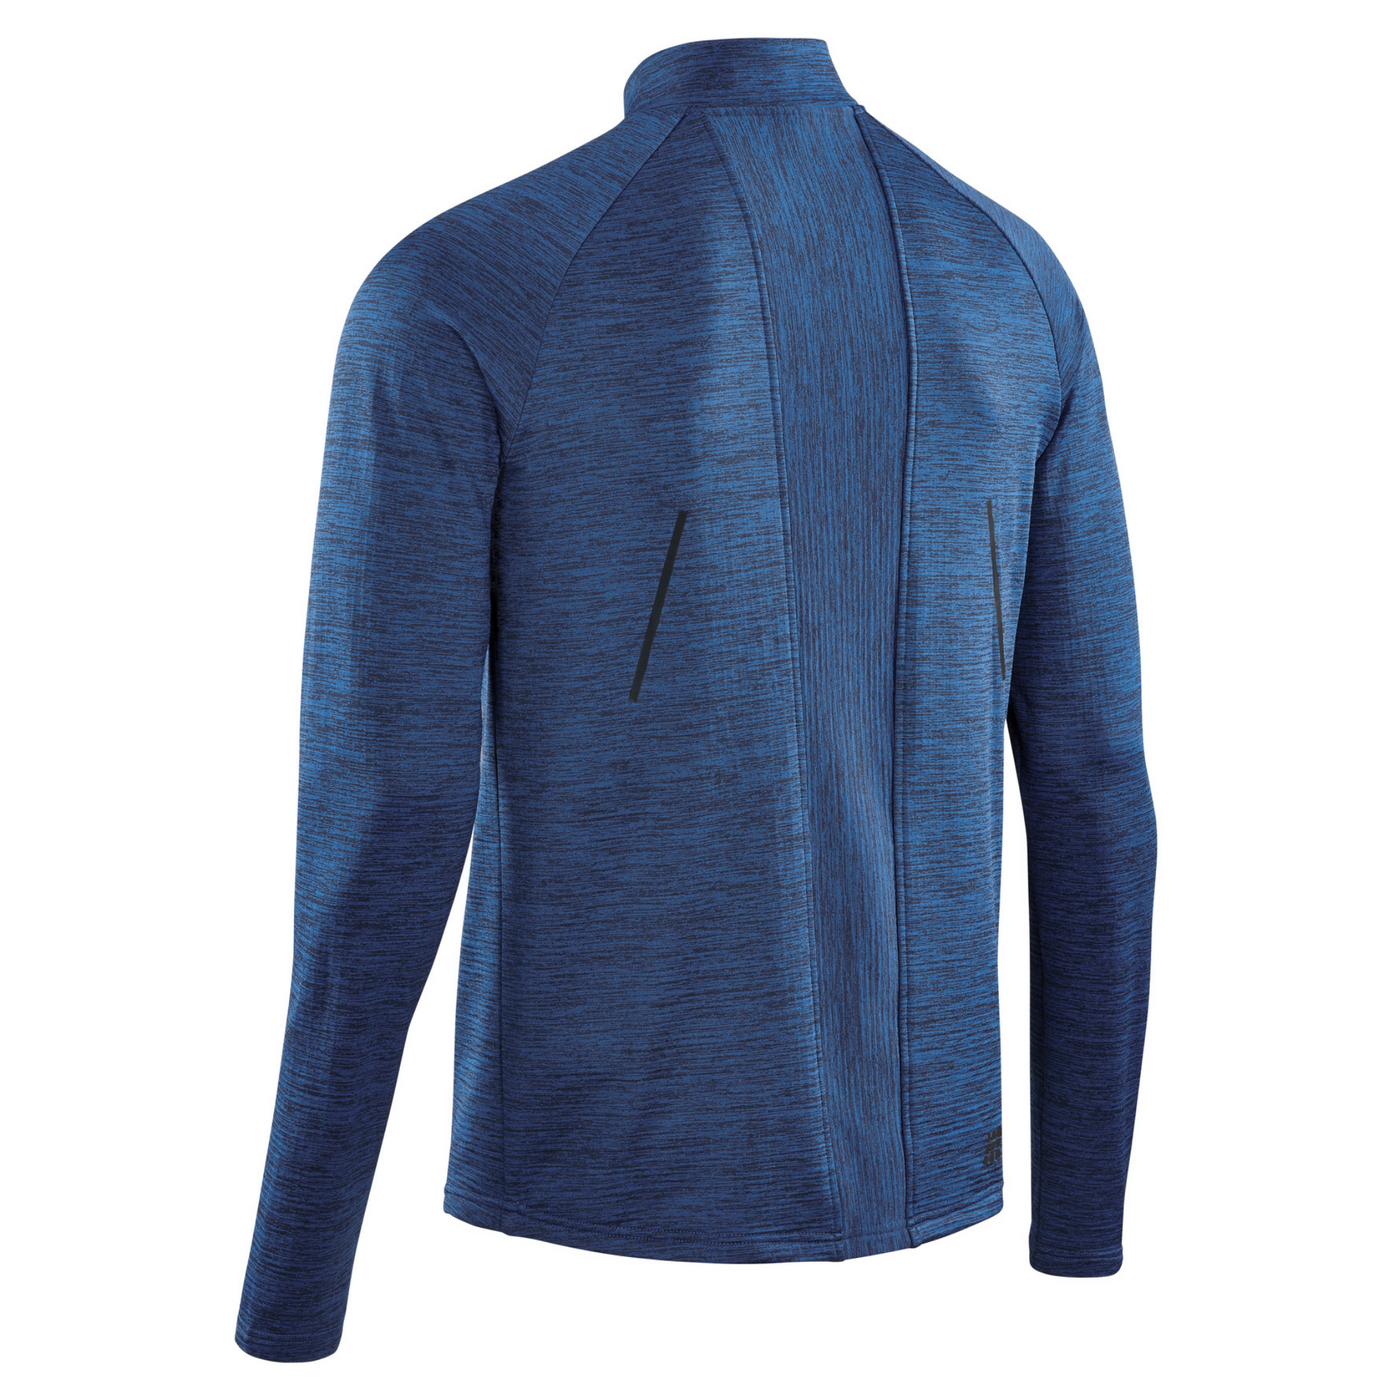 Winter Run Quarter Zip Pullover, Men, Dark Blue Melange, Back View